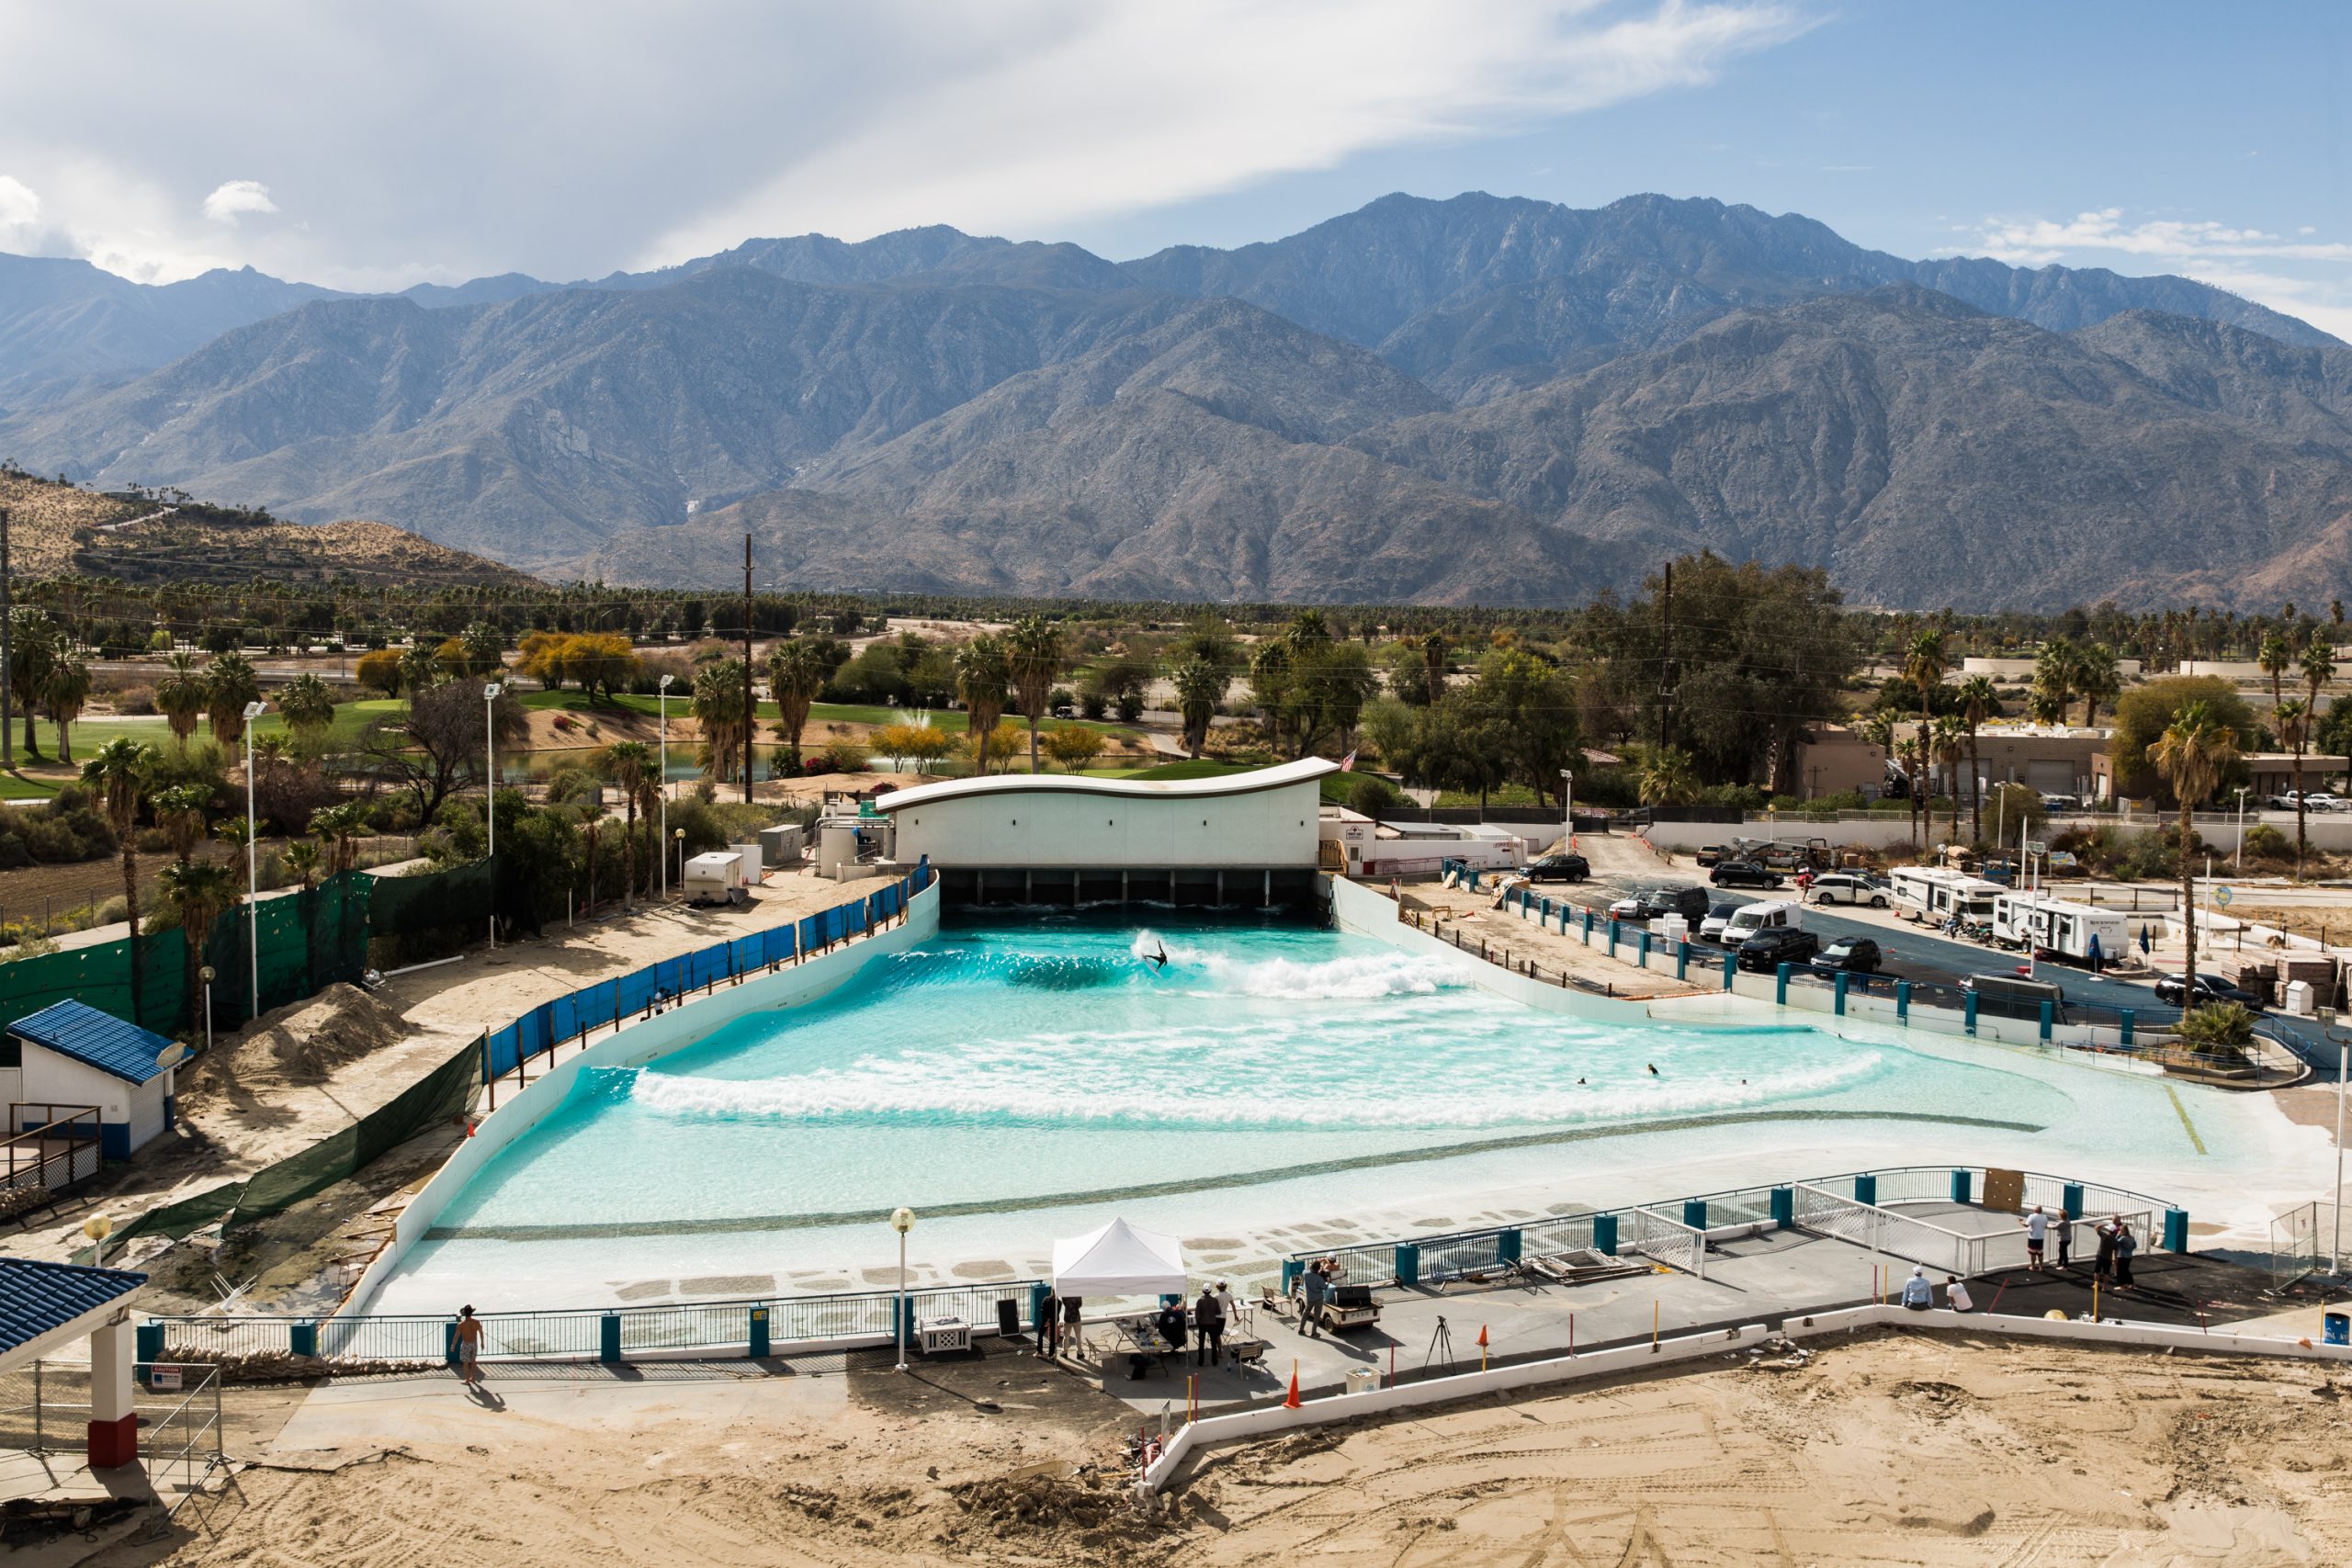 Palm Springs Surf Club - Test Tank